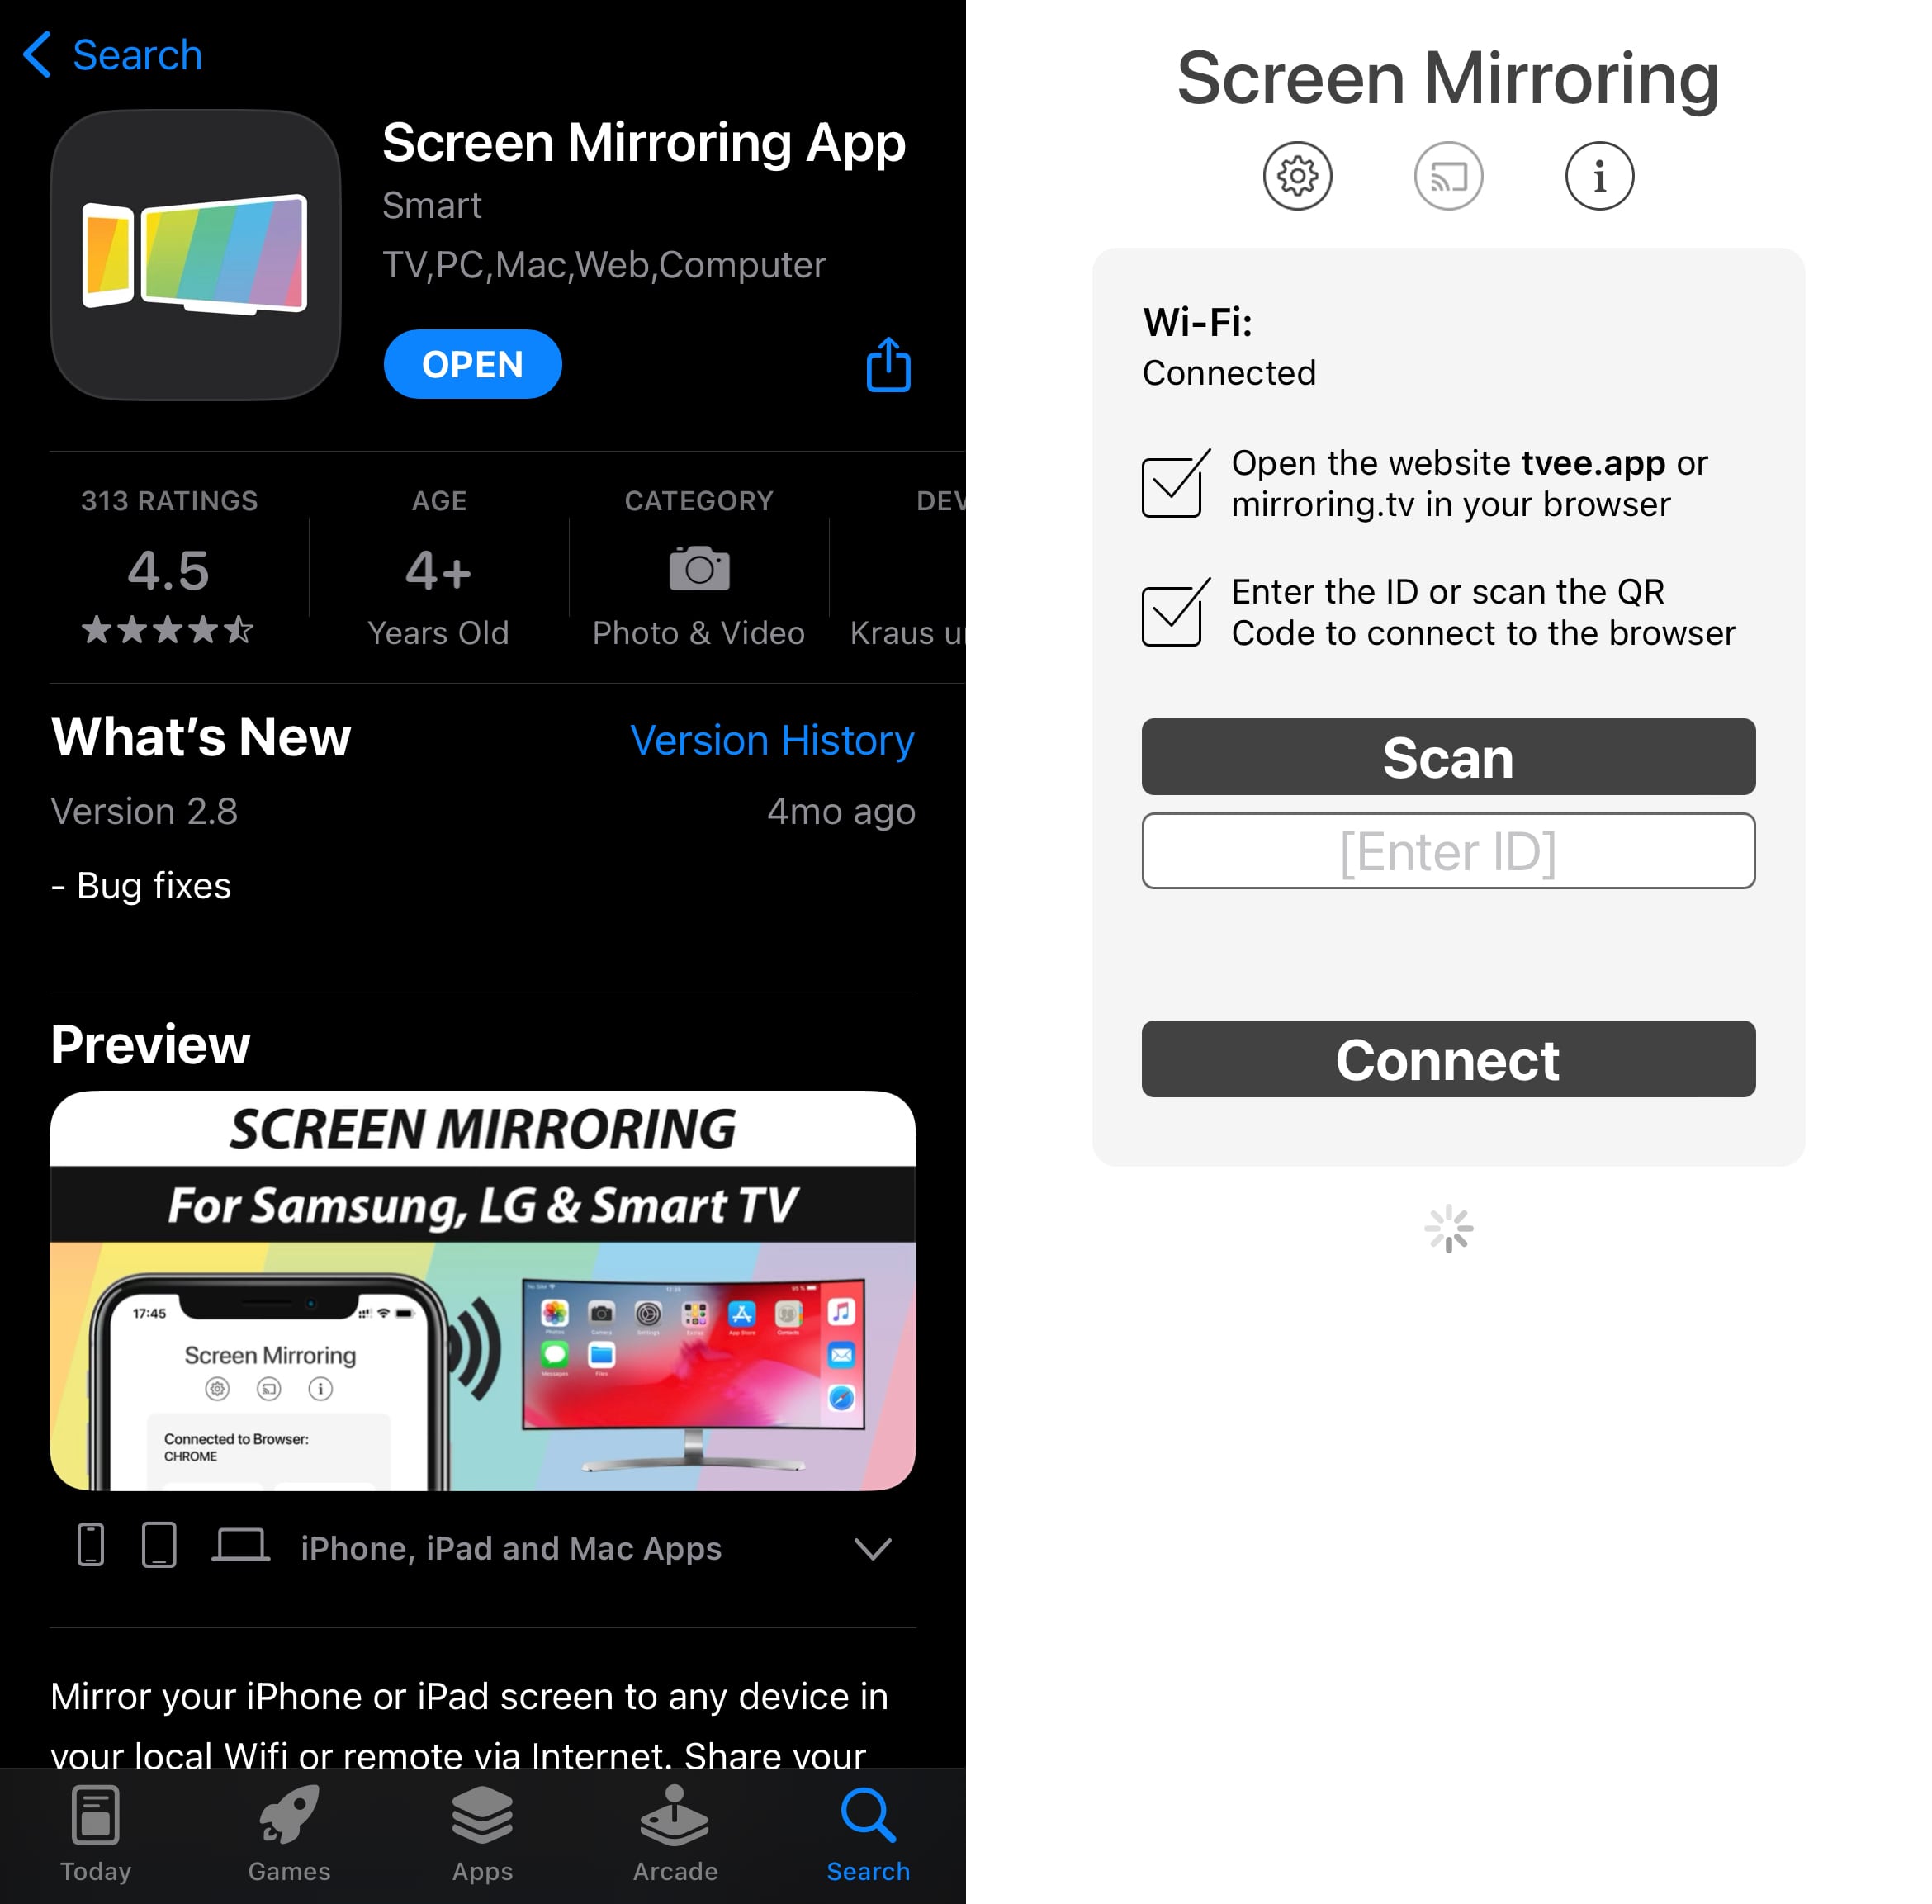 Screen Mirroring App on iPhone